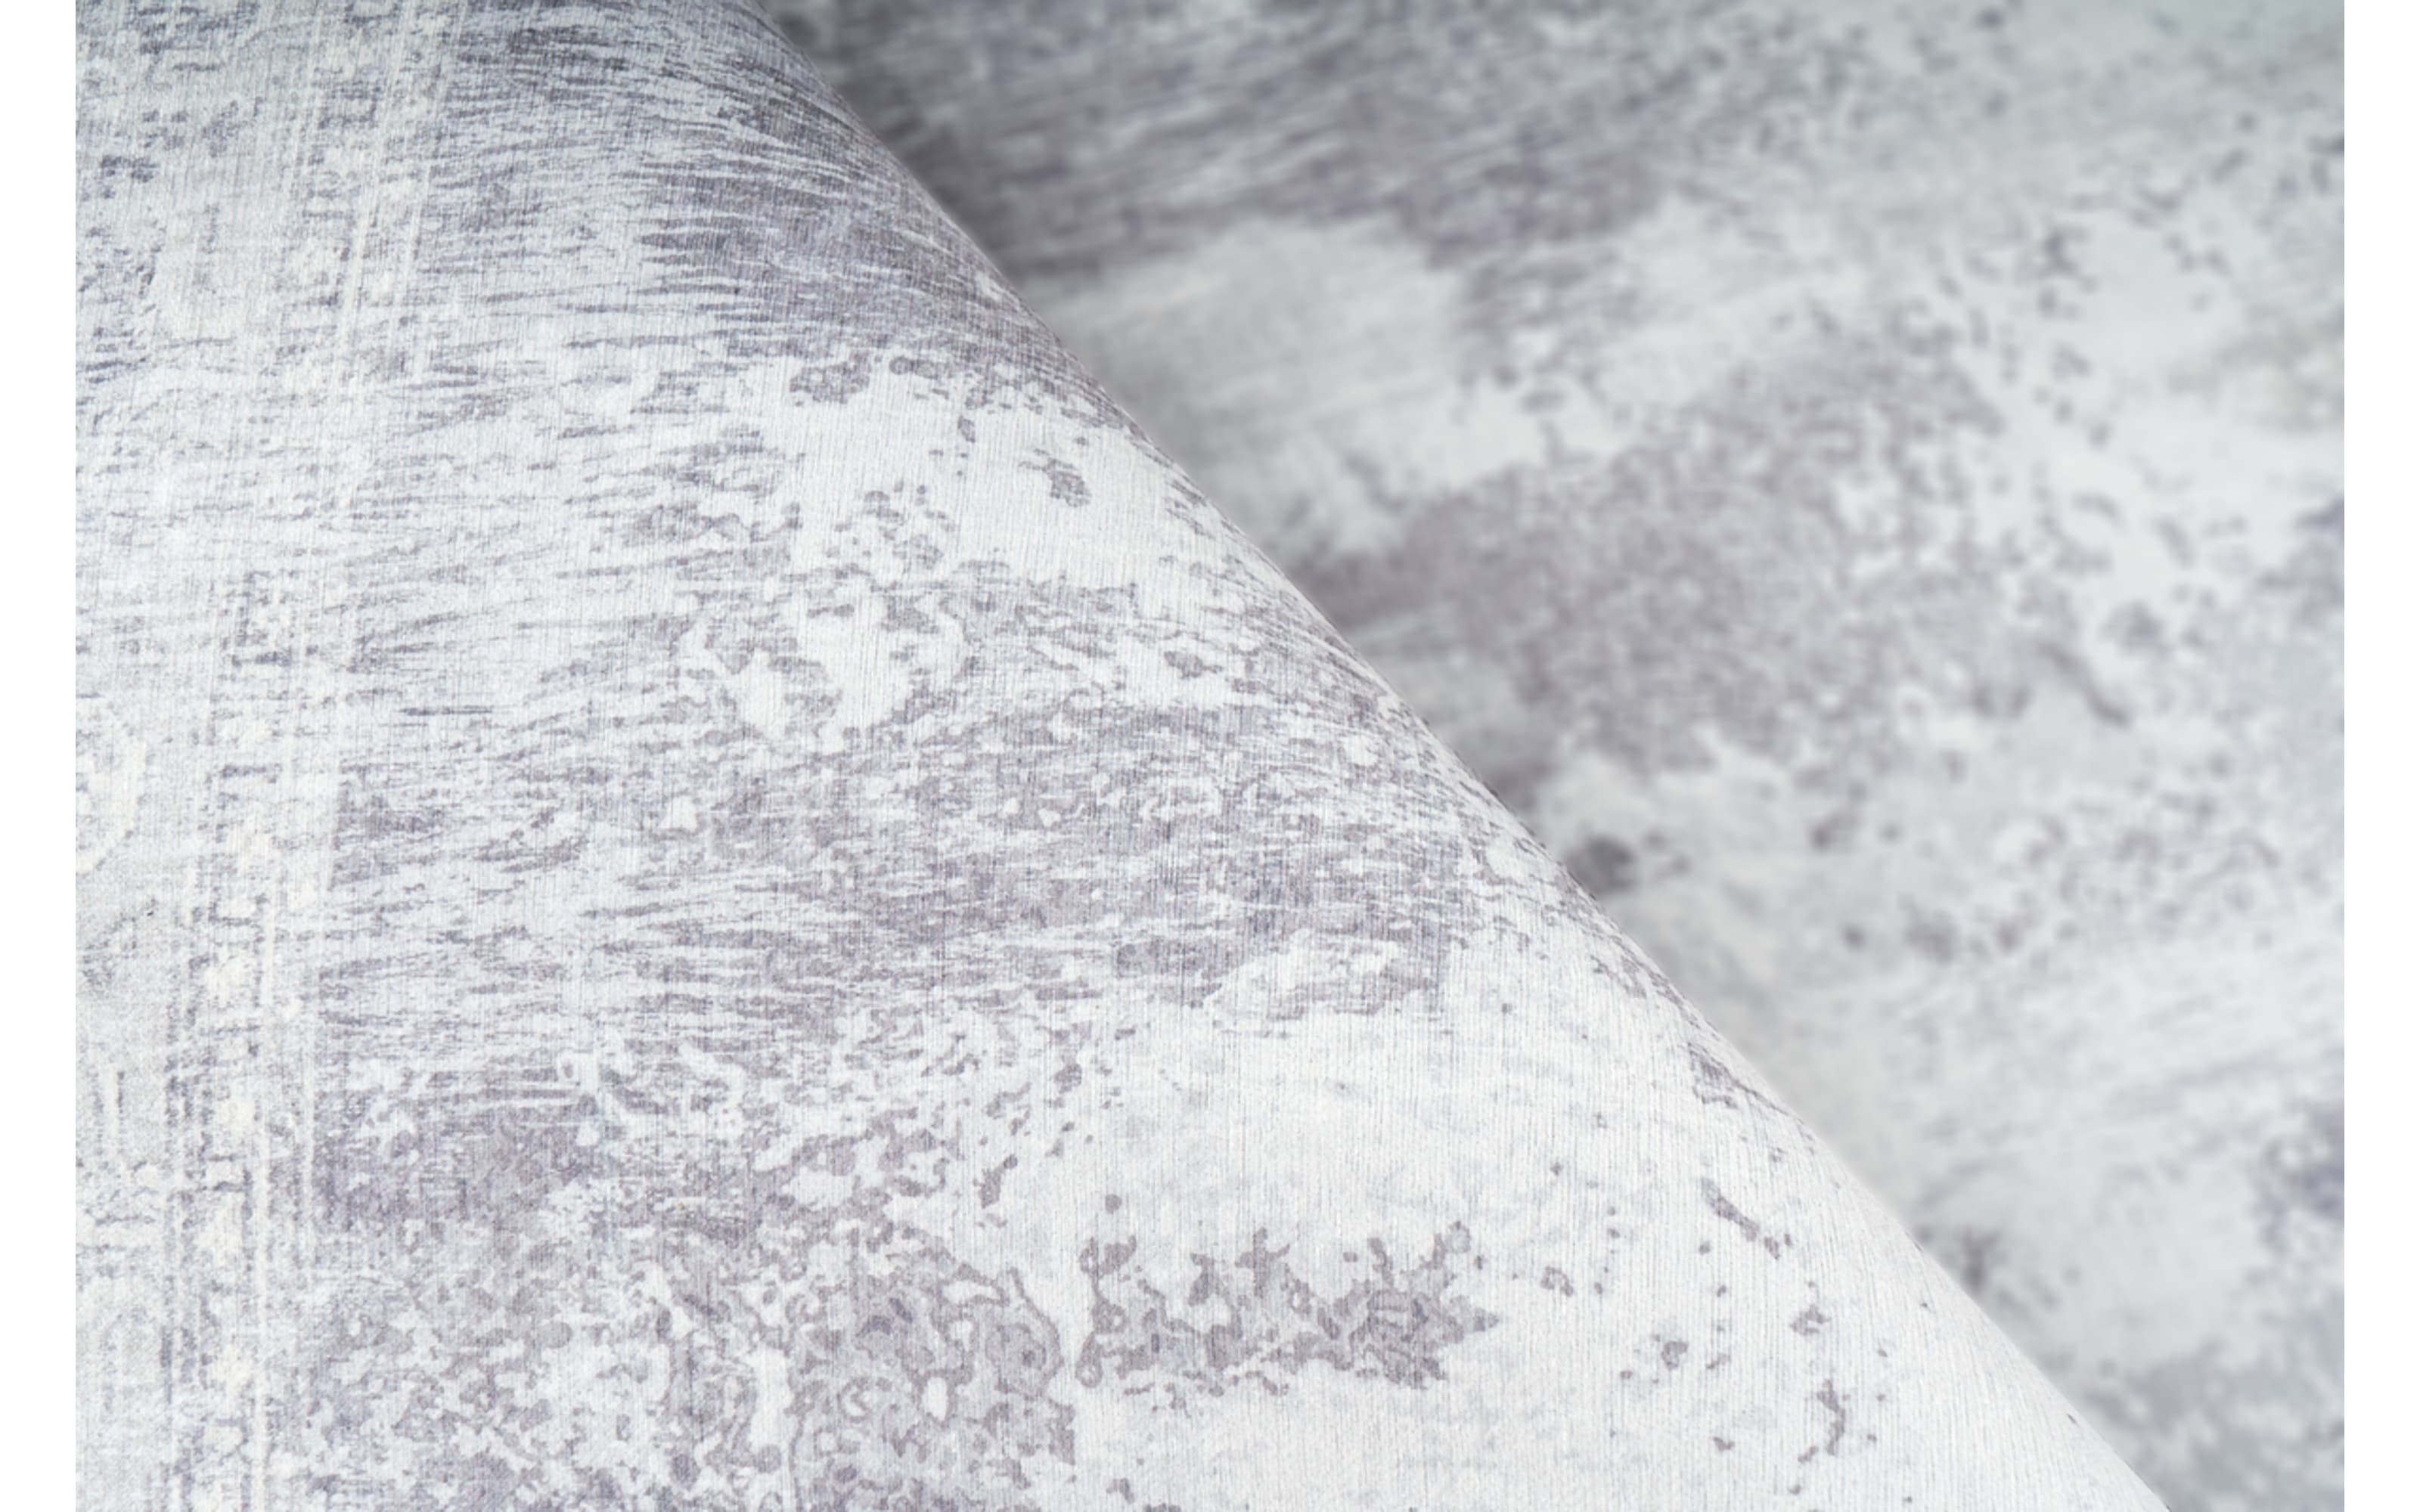 Teppich Galaxy 1000 in beige/grau, 170 x 240 cm